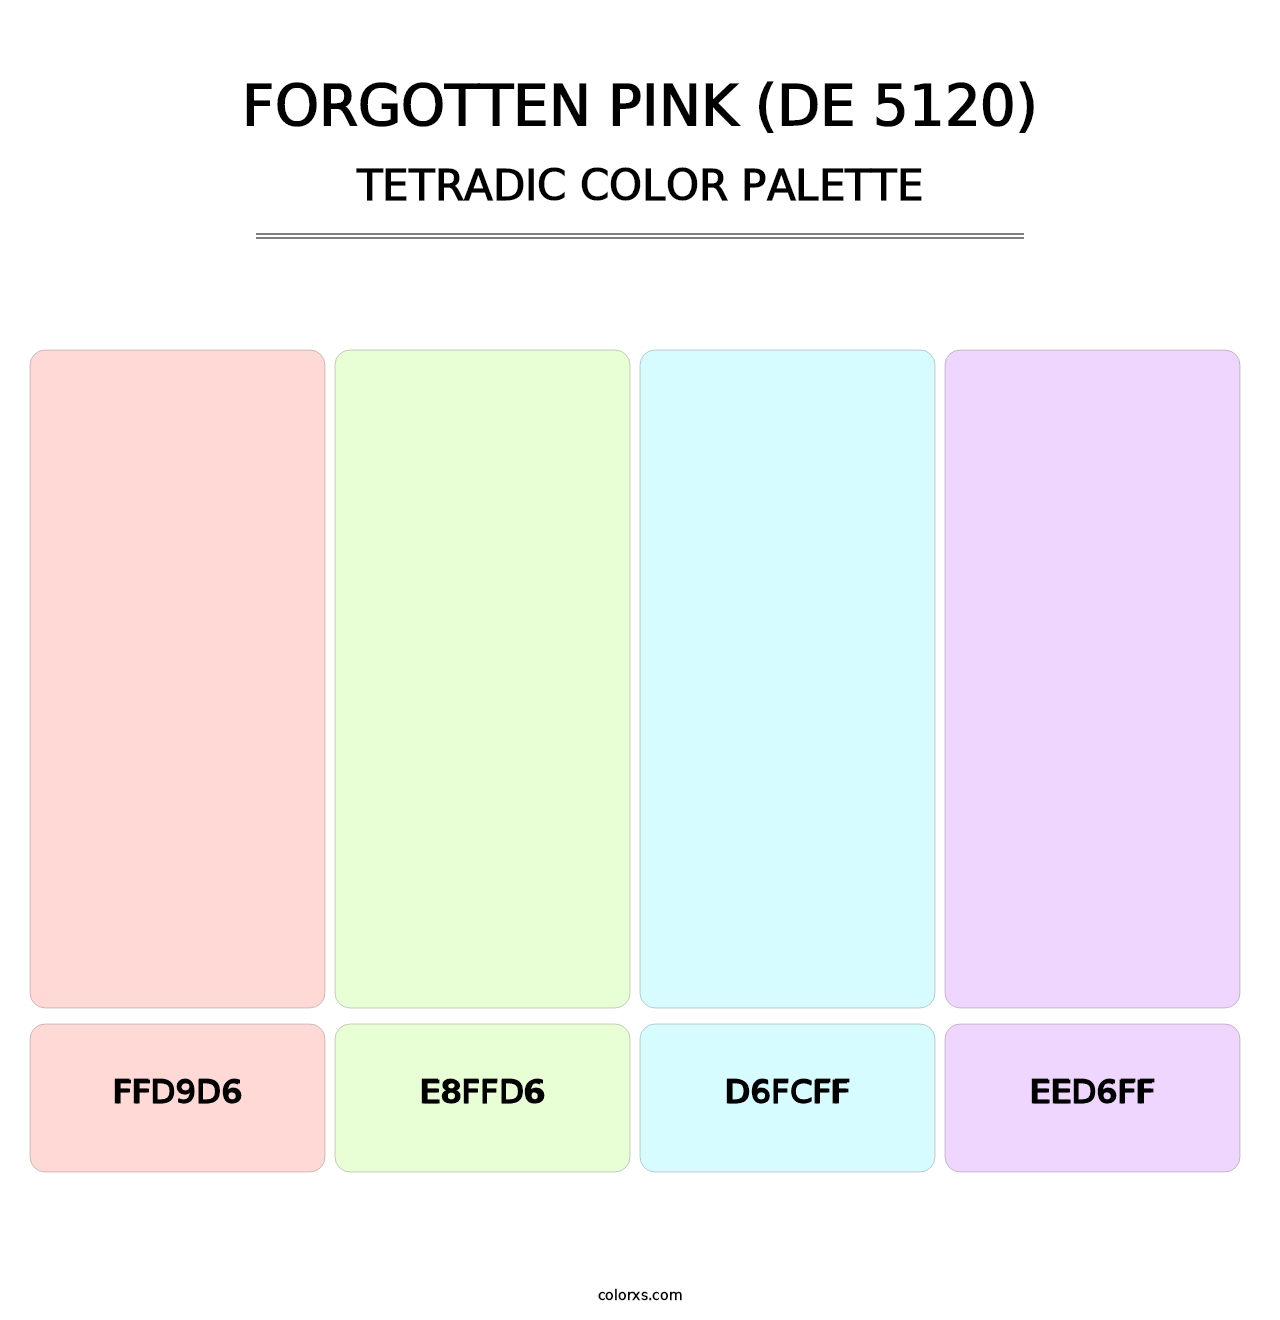 Forgotten Pink (DE 5120) - Tetradic Color Palette